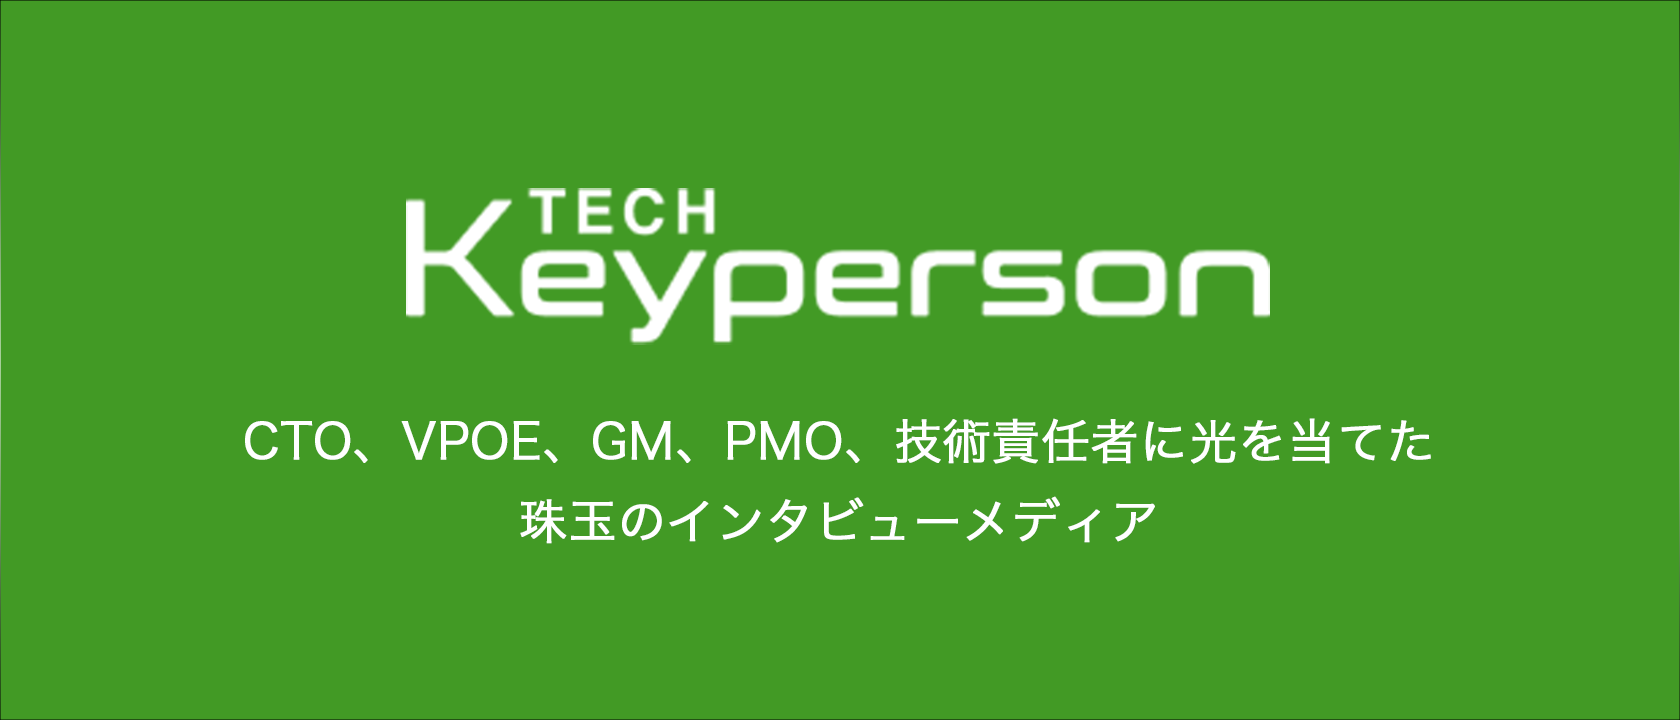 Tech Keyperson